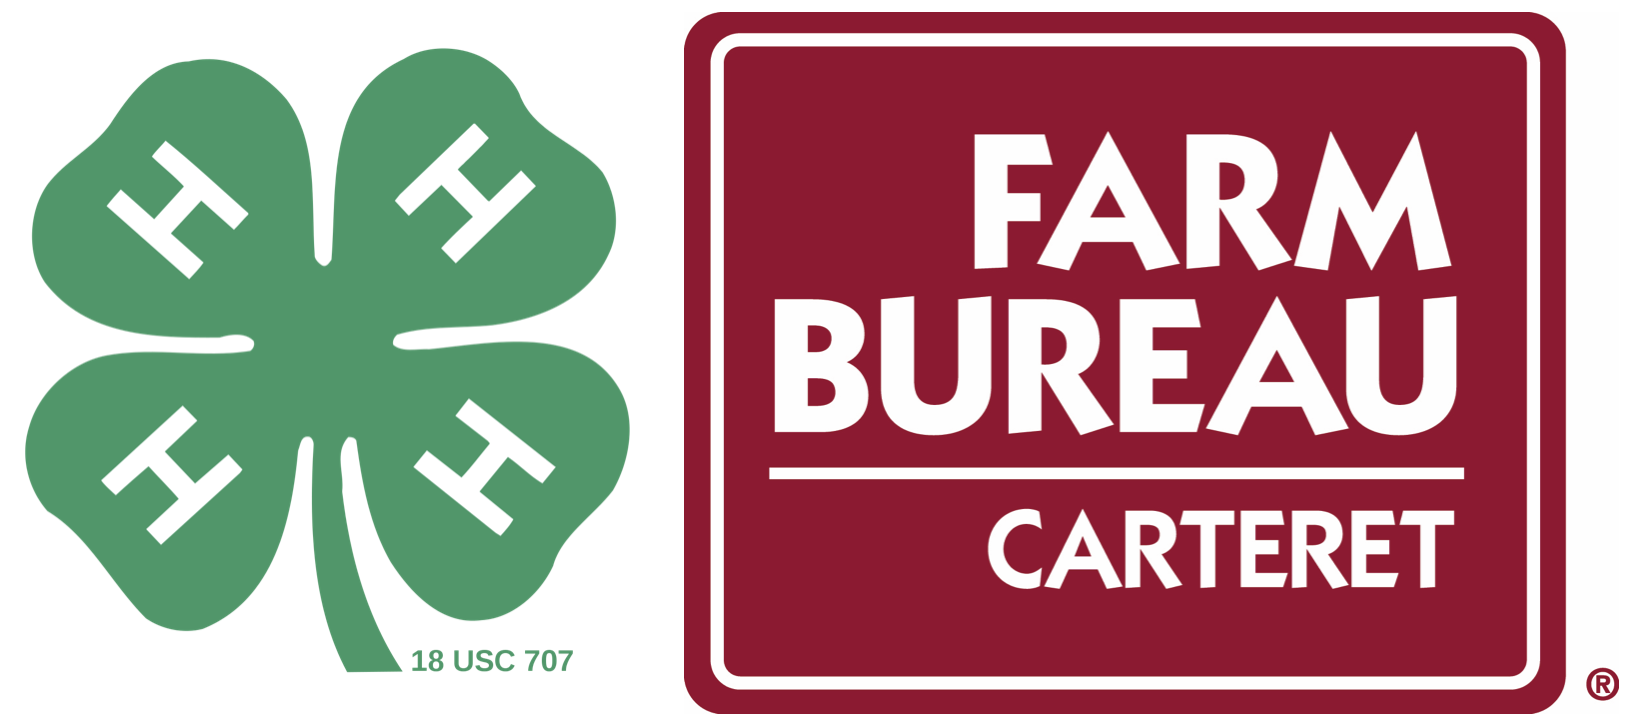 4-H and Carteret County Farm Bureau logos